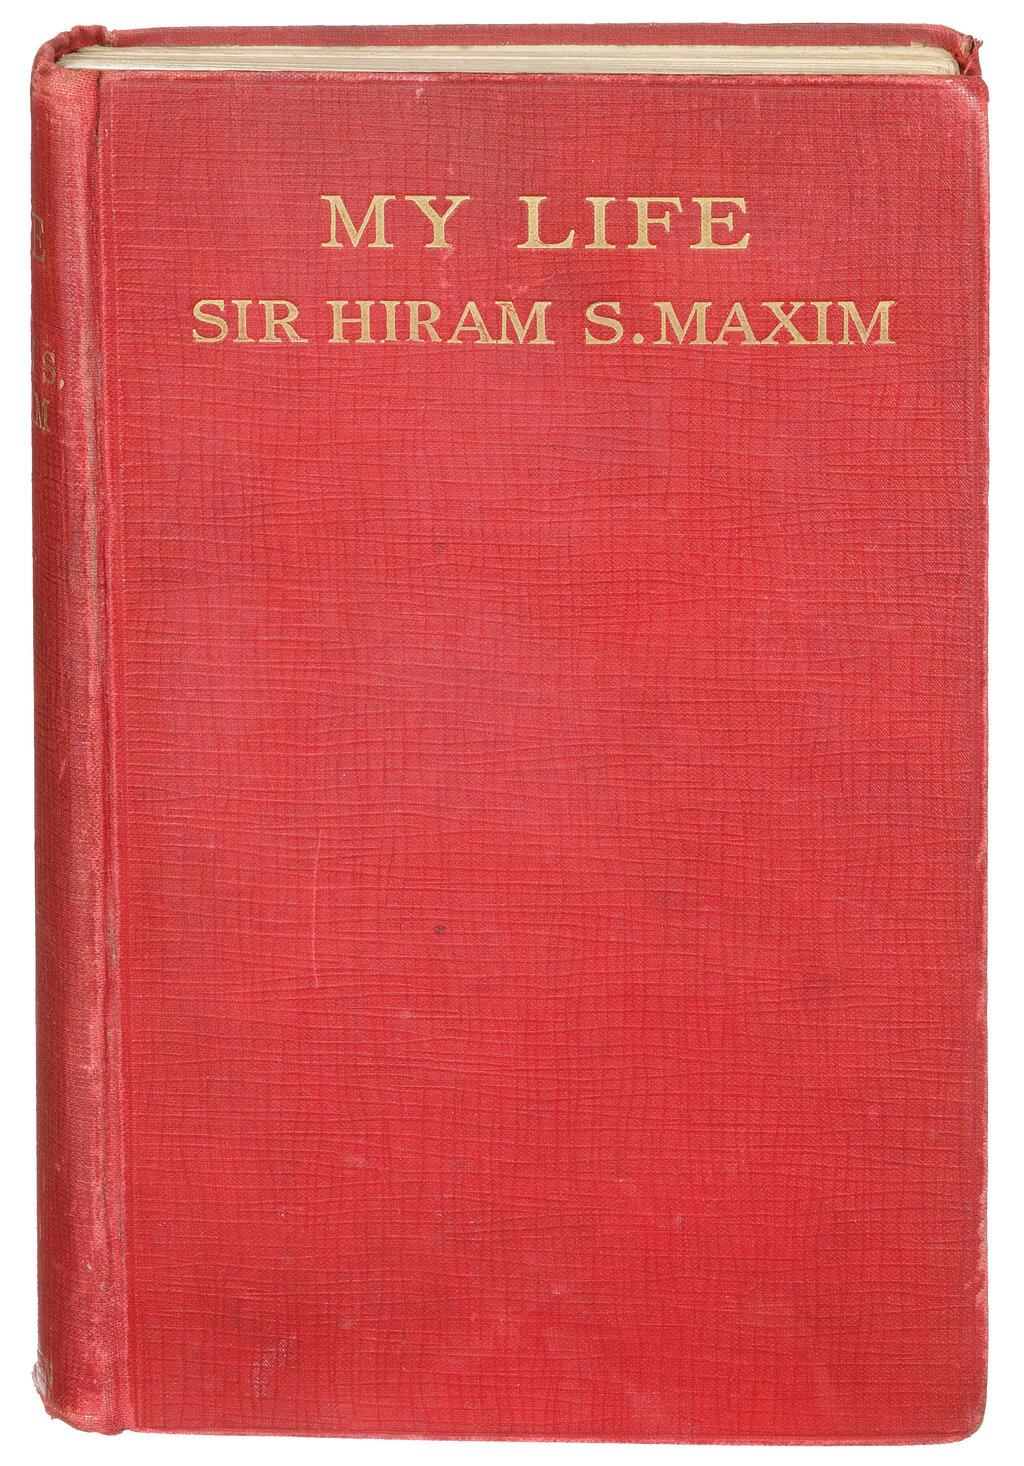 "My Life" Book by Sir Hiram S. Maxim Inscribed to Benjamin Orman